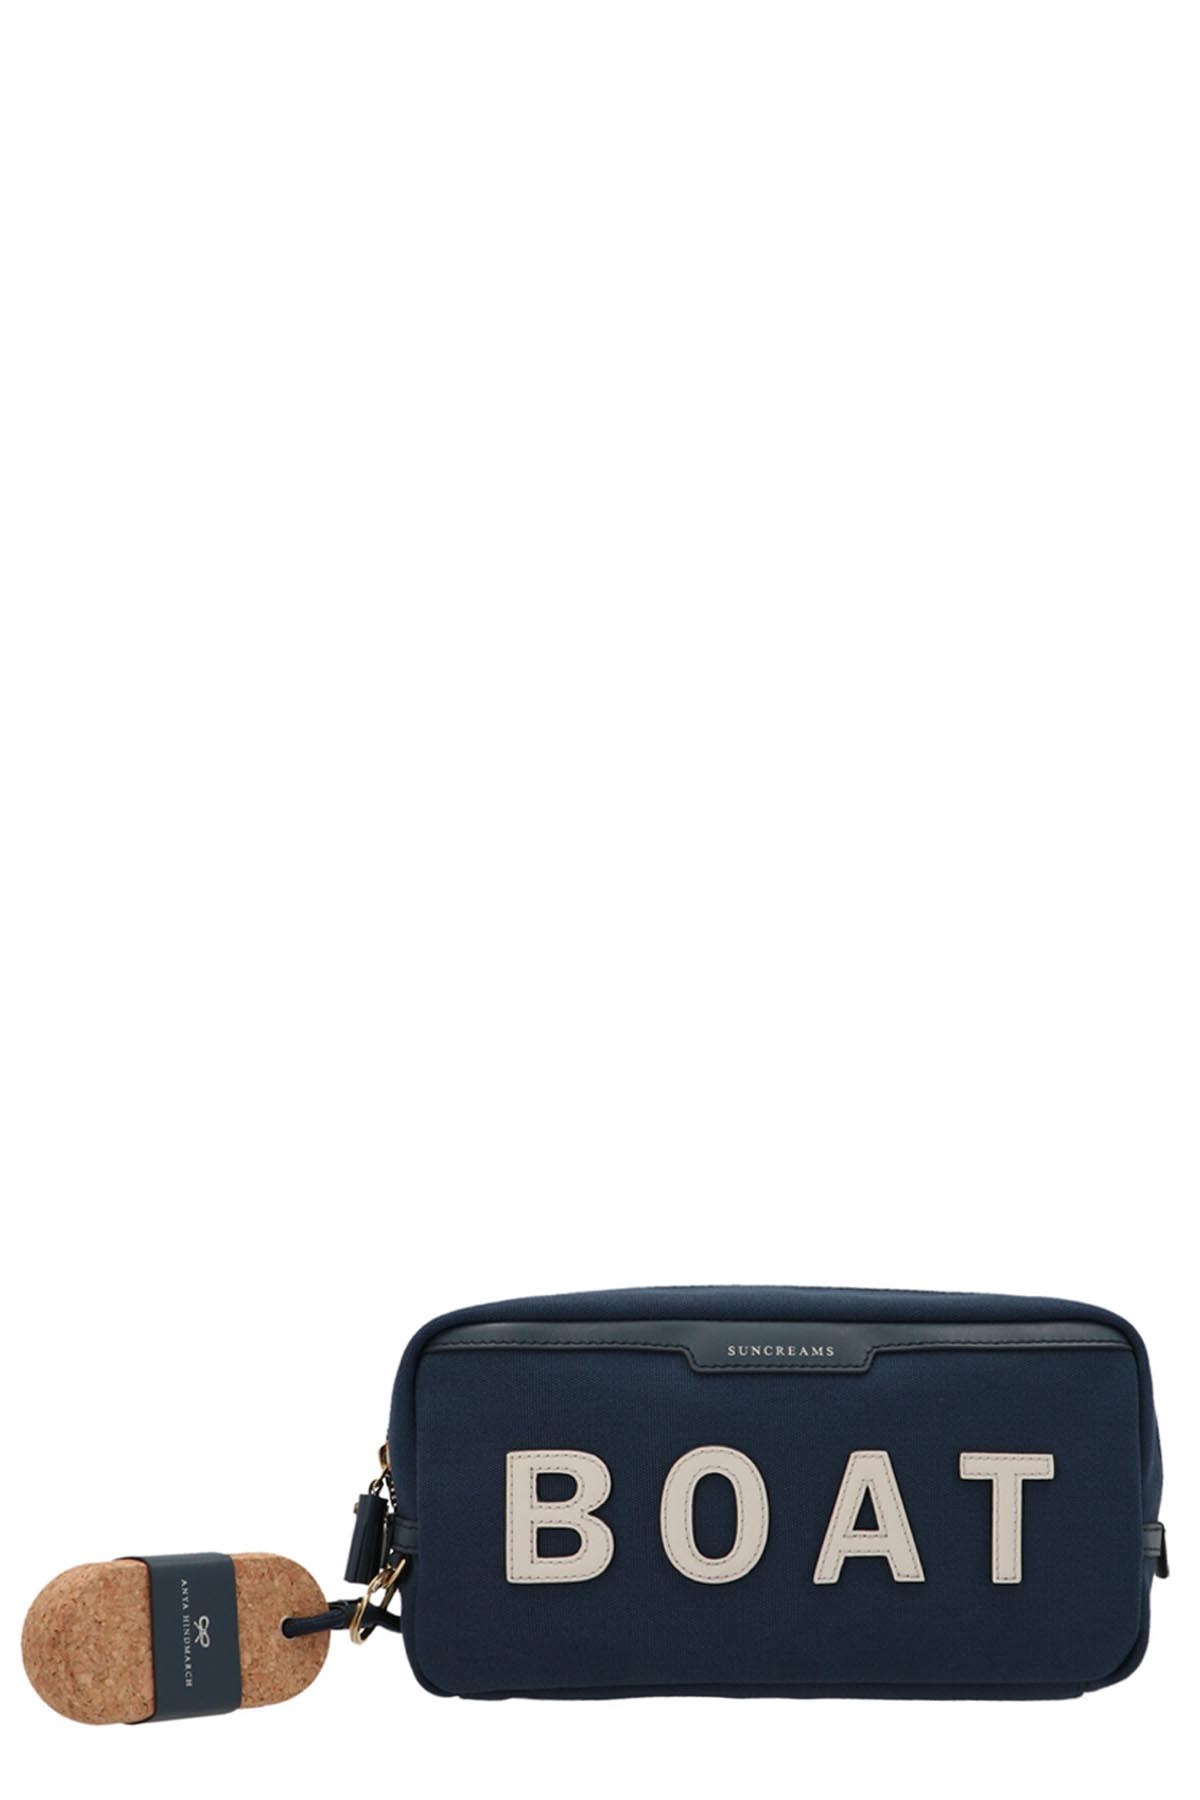 ANYA HINDMARCH 'Suncreams Boat' Clutch Bag